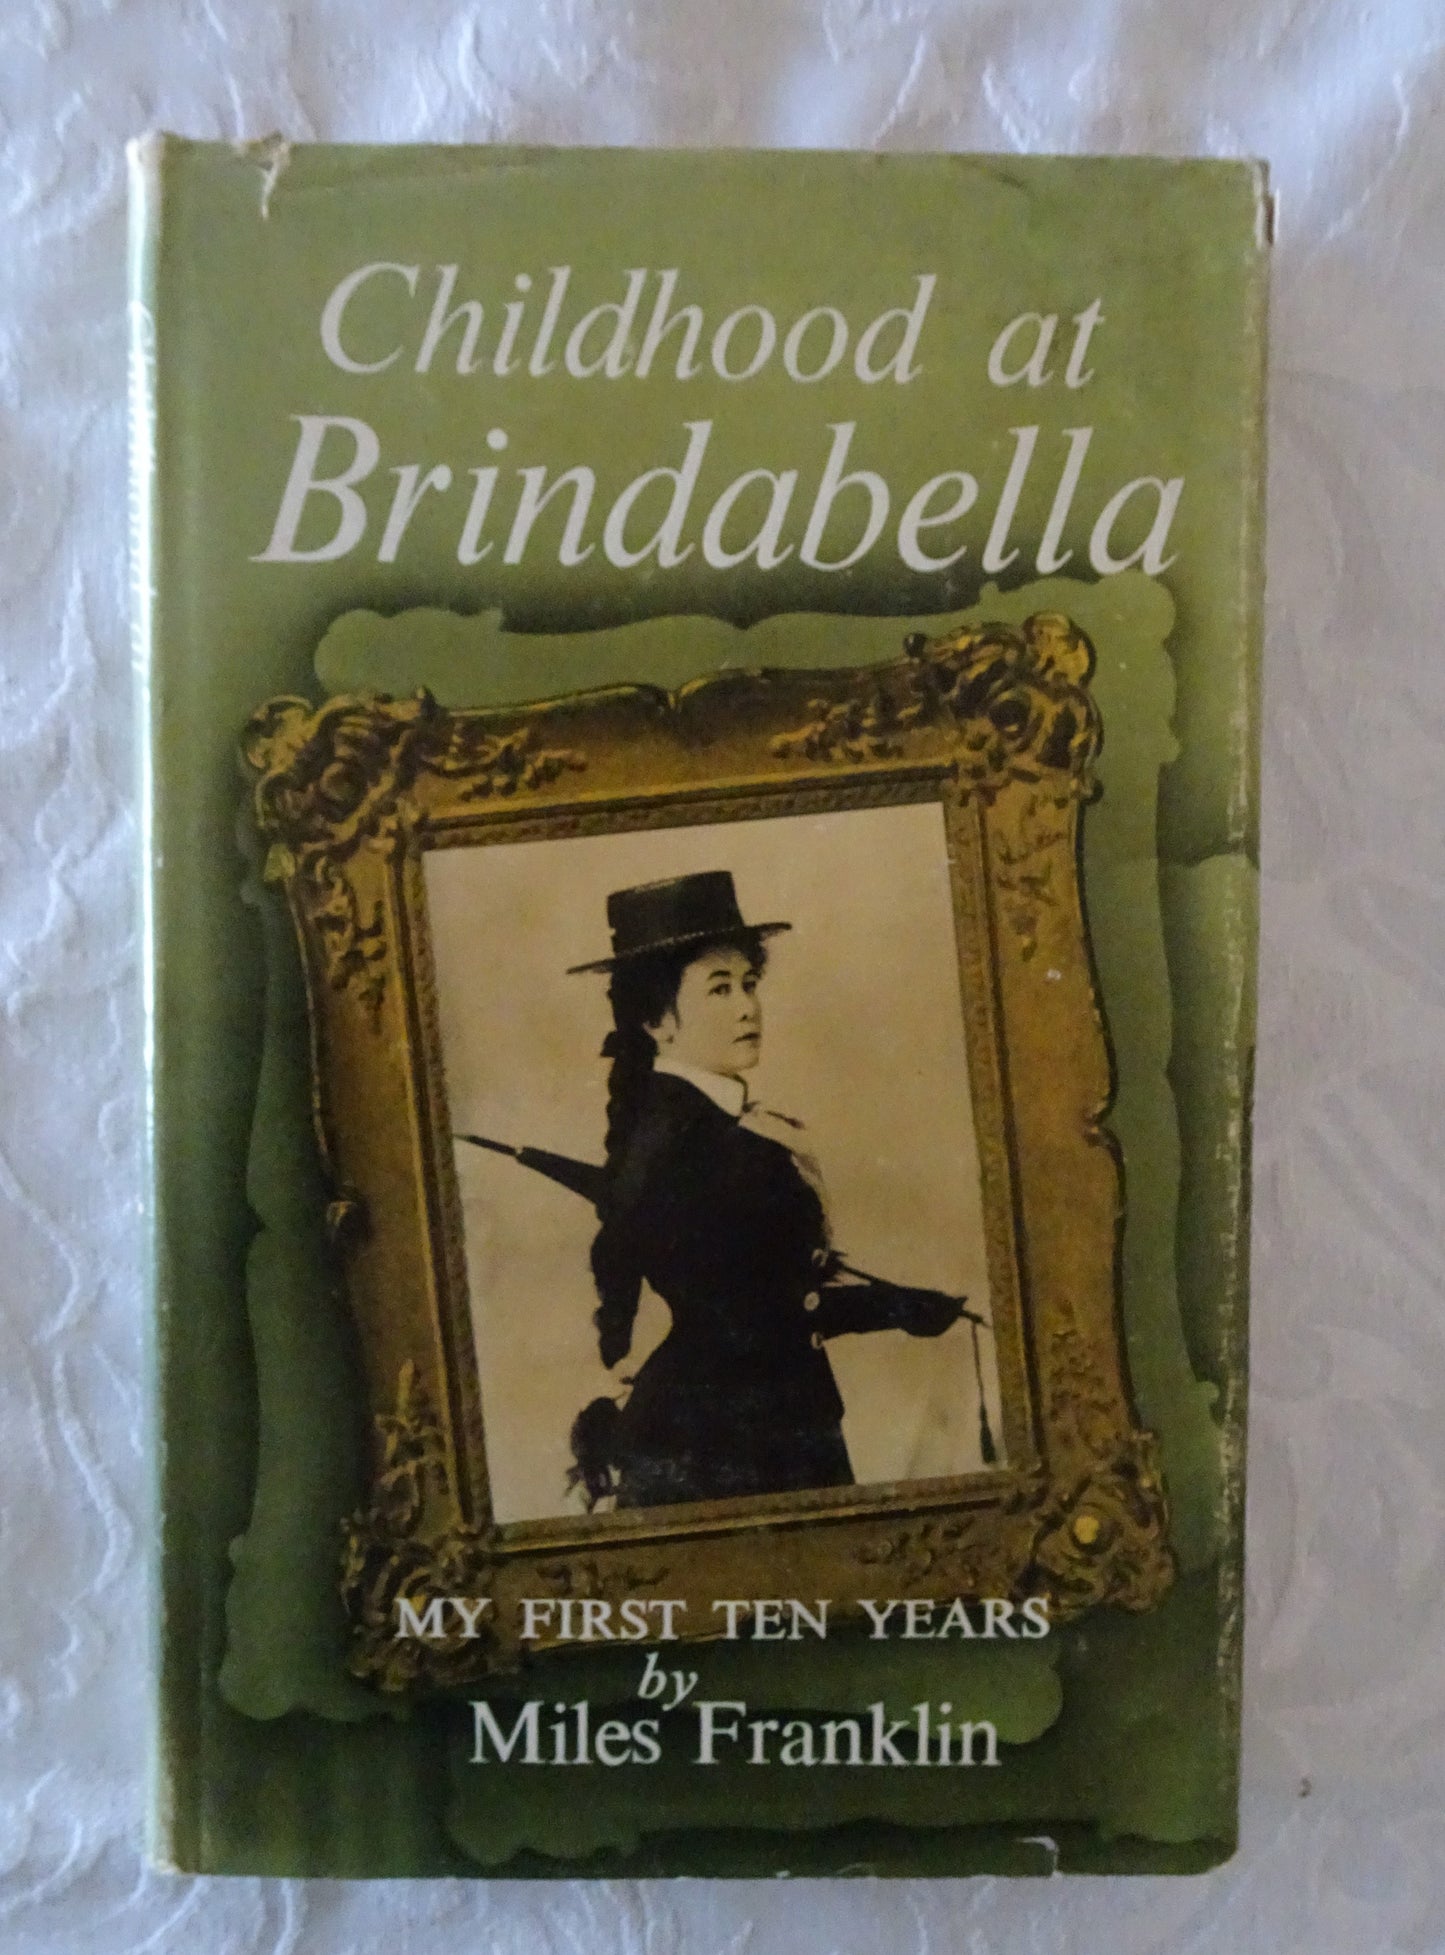 Childhood at Brindabella by Miles Franklin